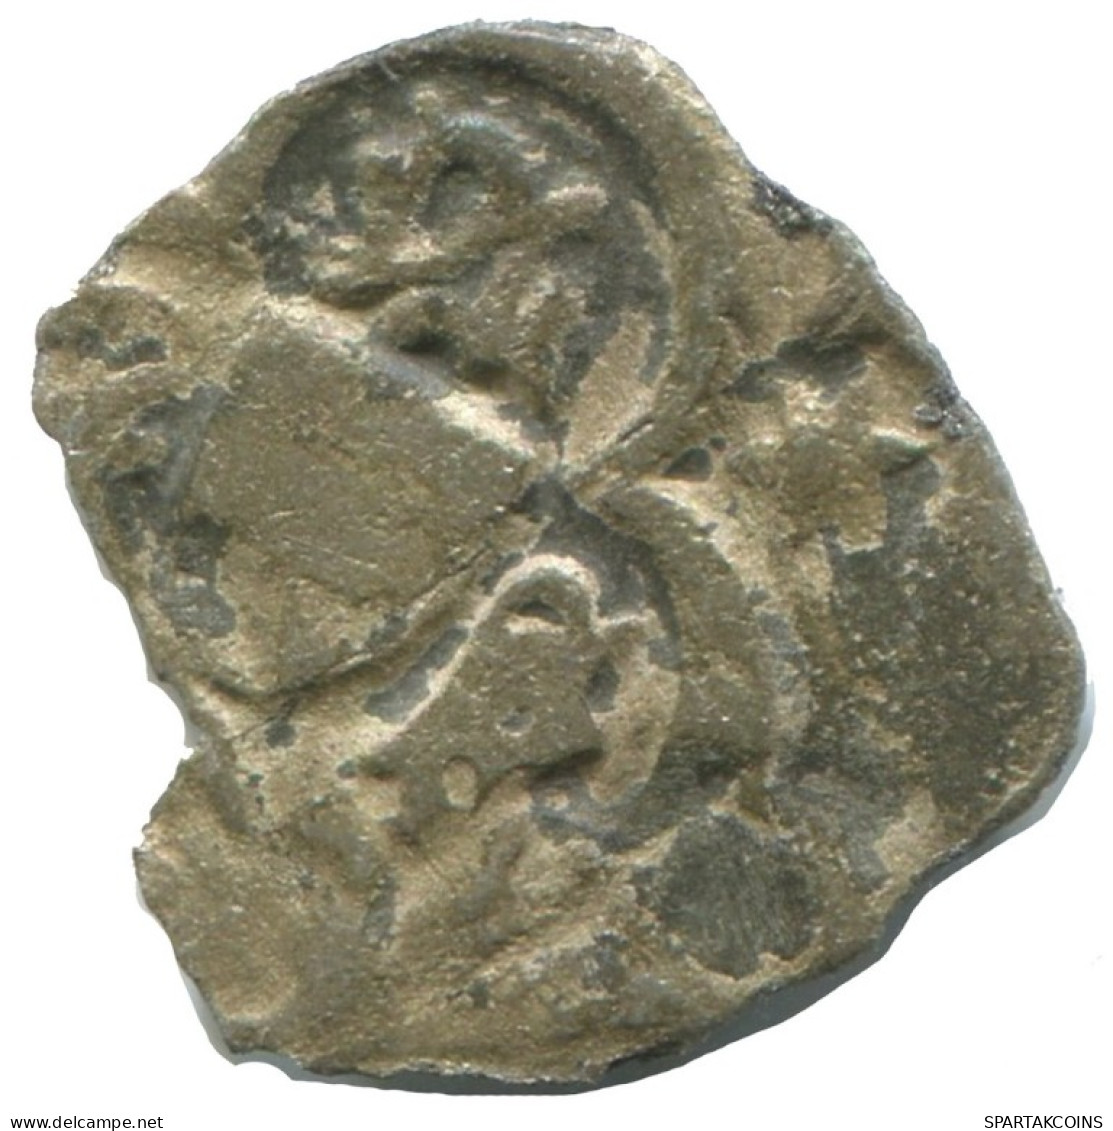 Germany Pfennig Authentic Original MEDIEVAL EUROPEAN Coin 0.9g/13mm #AC206.8.E.A - Monedas Pequeñas & Otras Subdivisiones